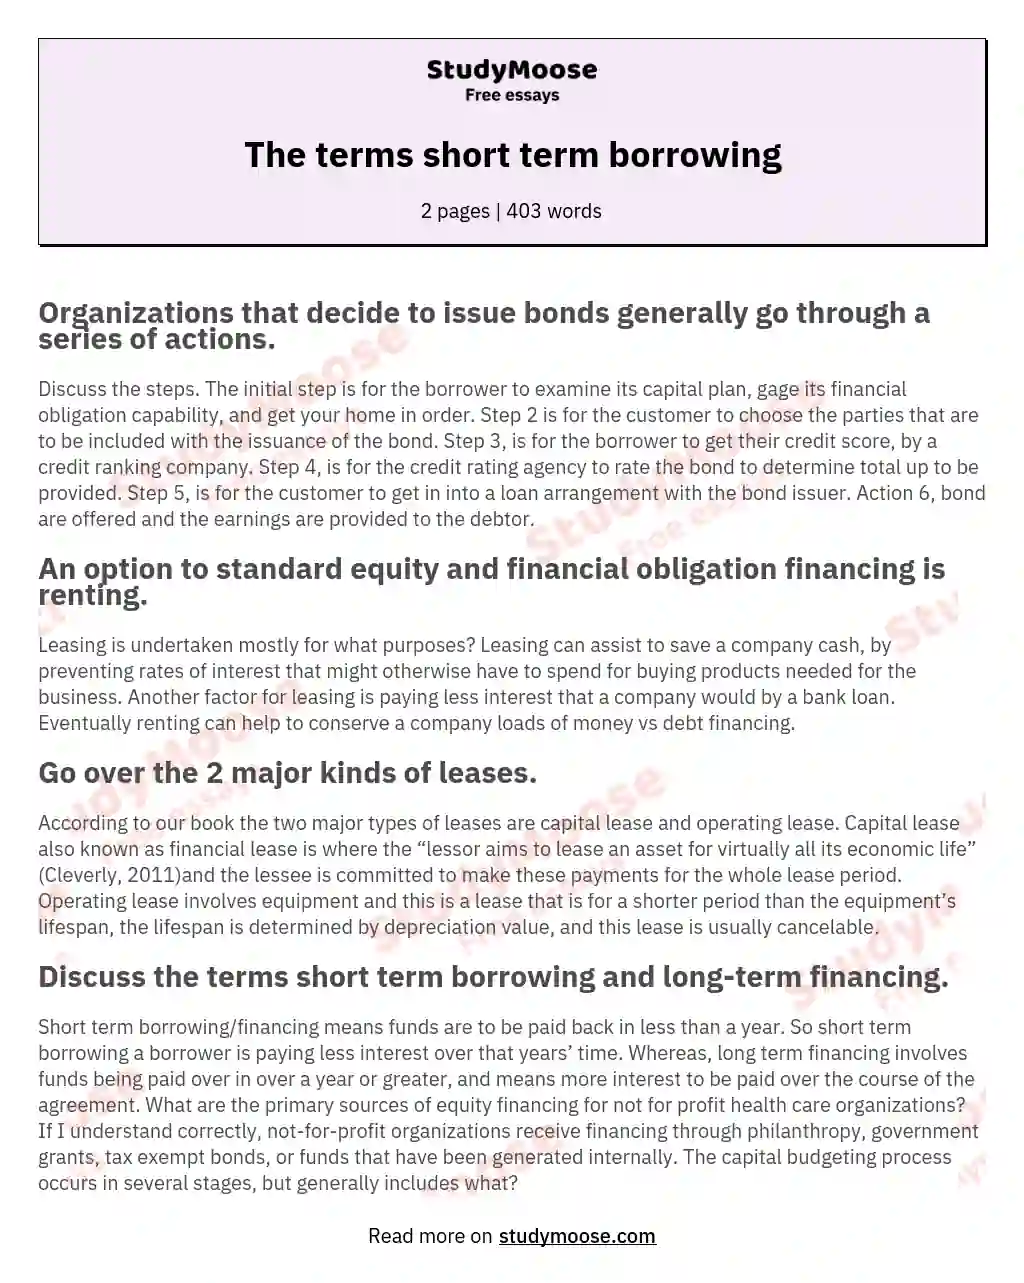 The terms short term borrowing